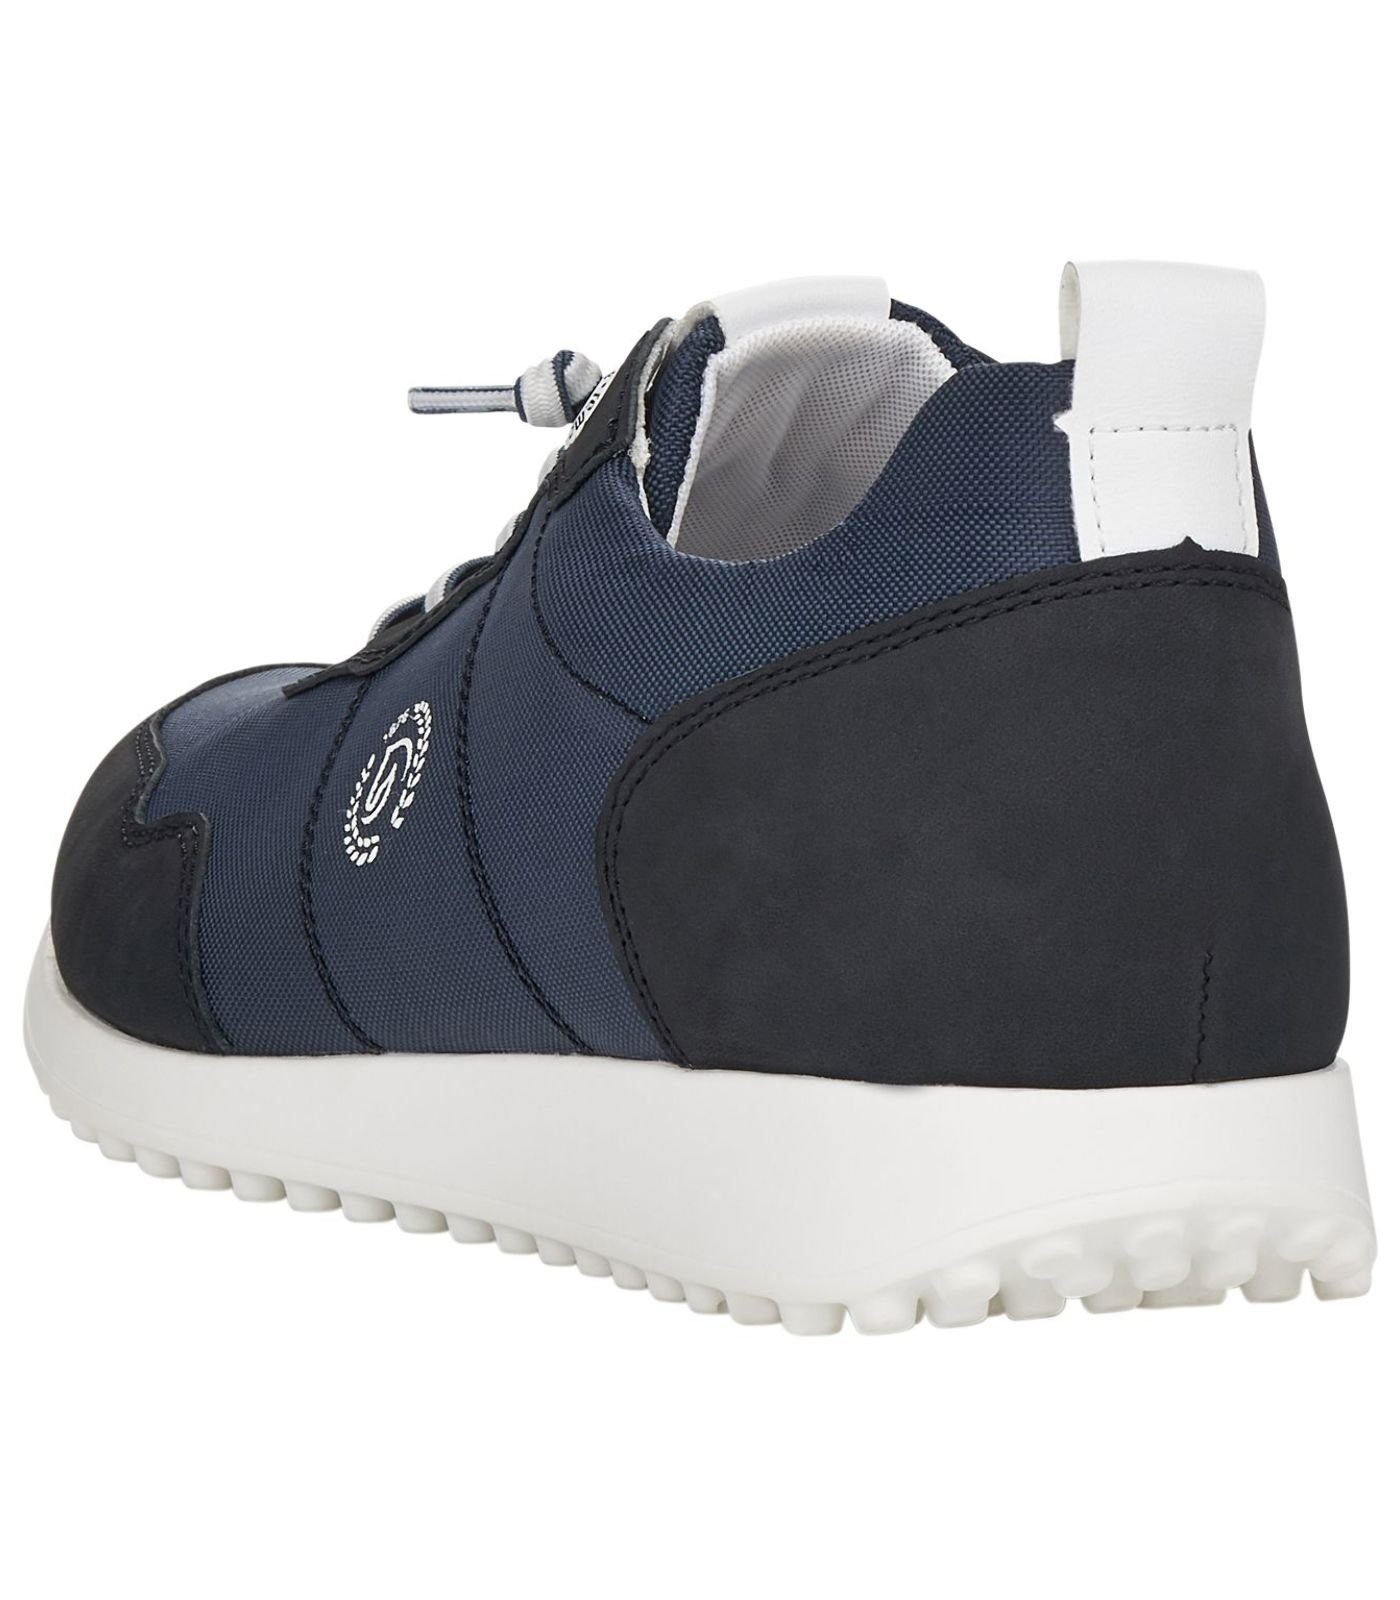 Lederimitat/Textil Sneaker Sneaker Remonte